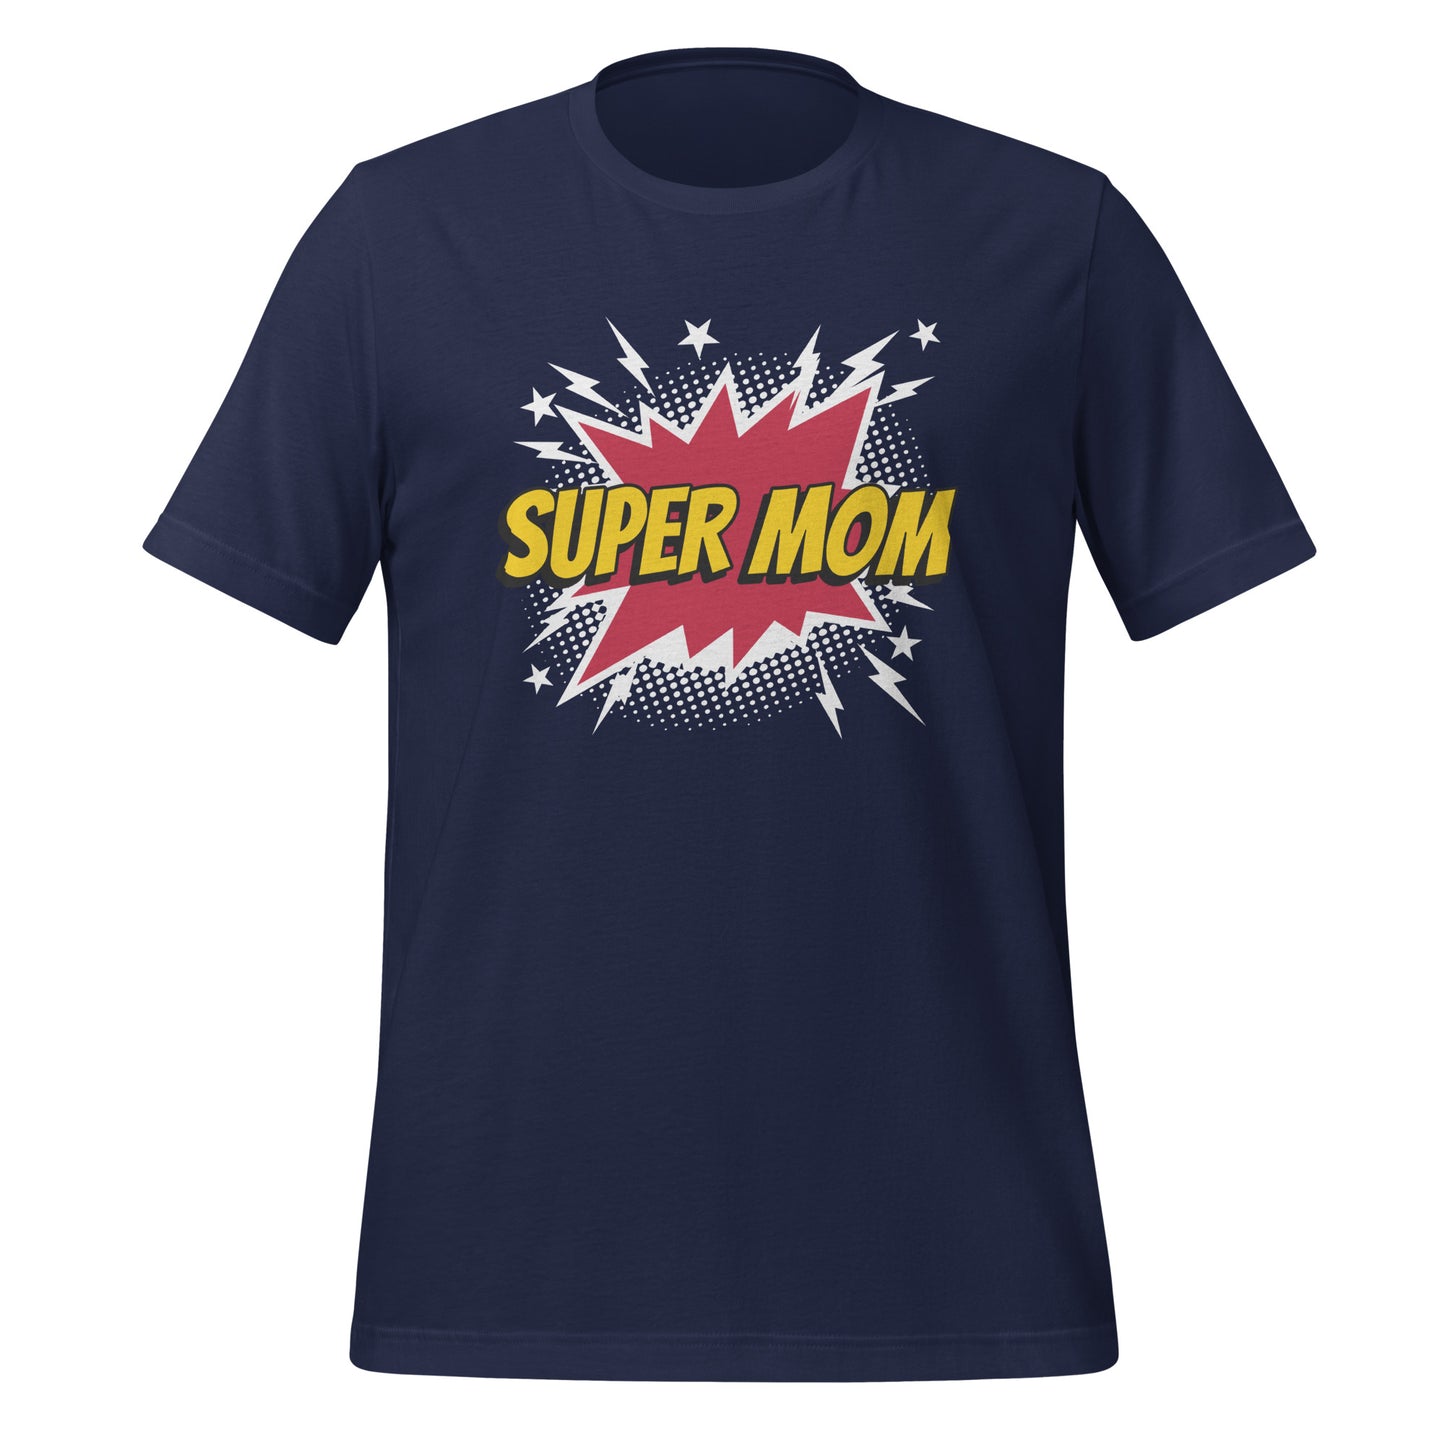 SUPER MOM Adult T-Shirt